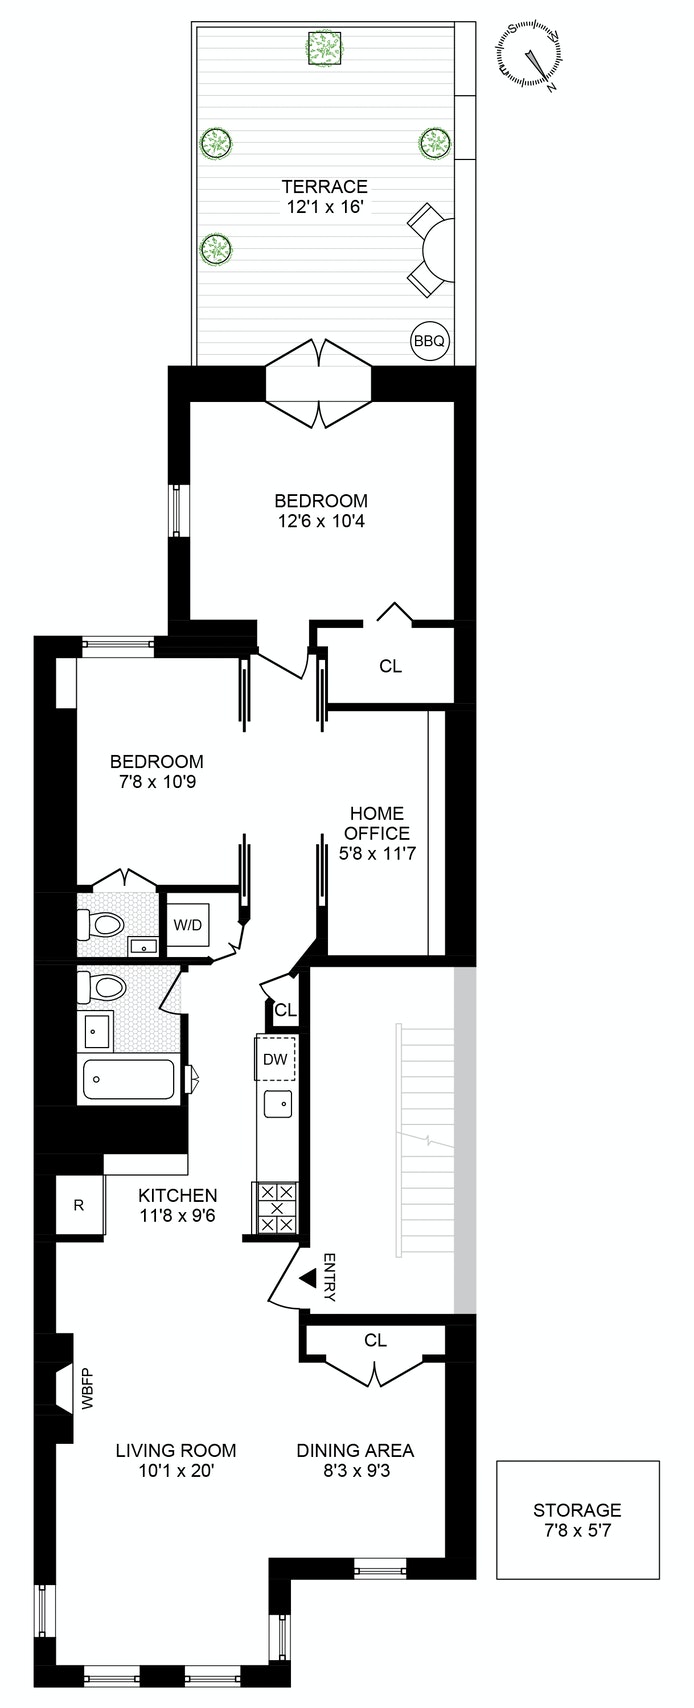 Floorplan for 648 2nd Street, 3